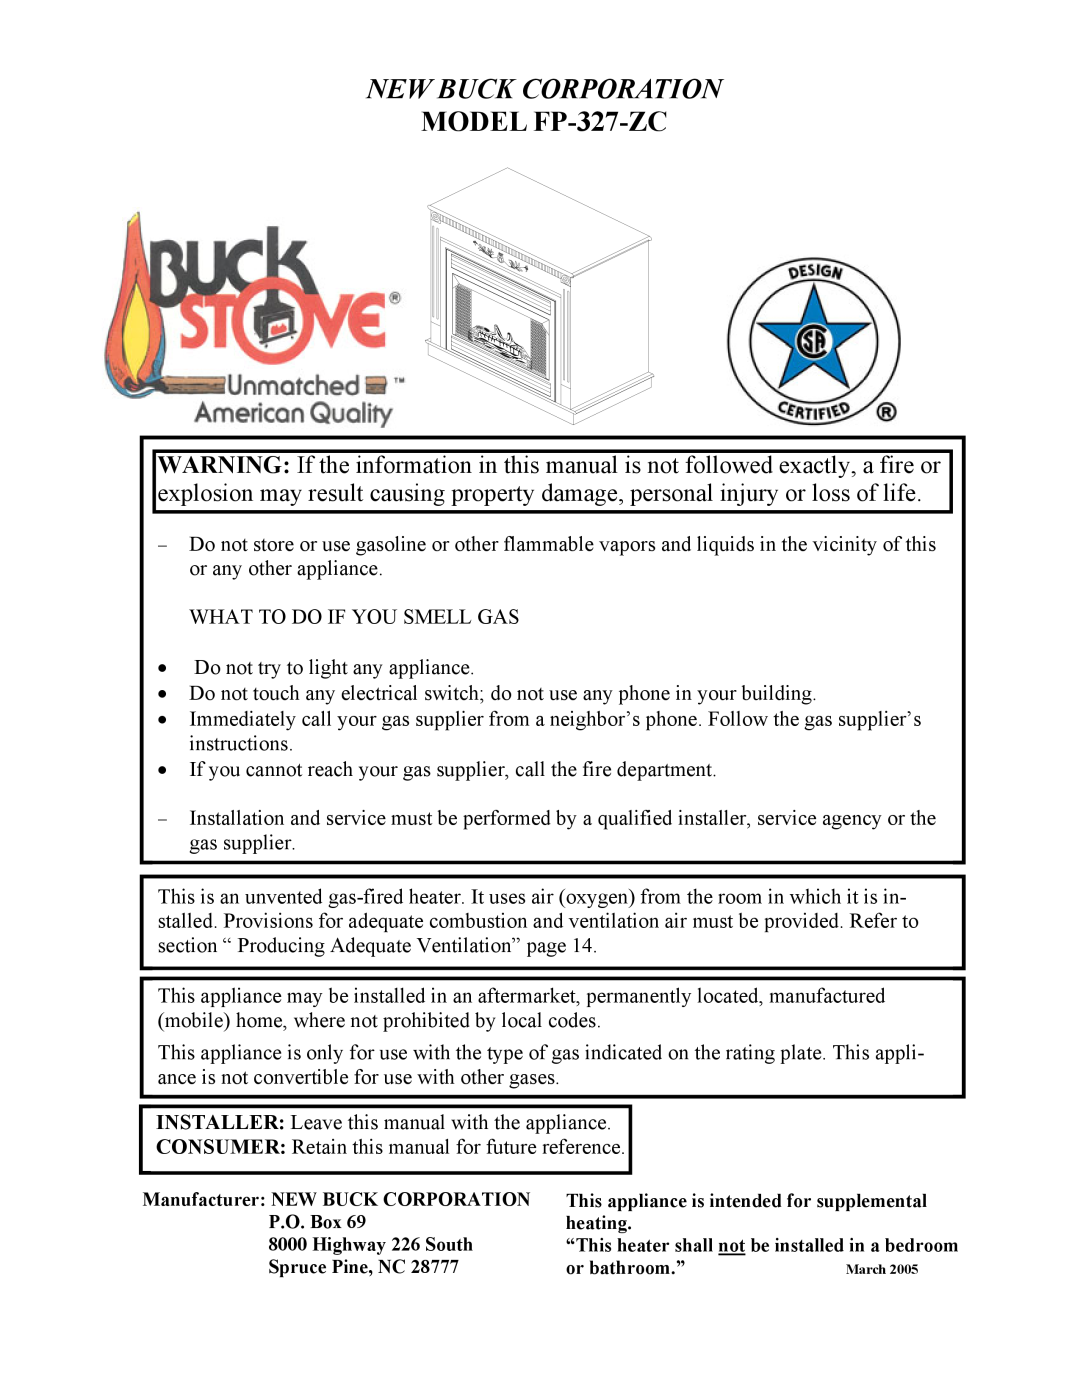 New Buck Corporation MODEL FP-327-ZC manual New Buck Corporation, Manufacturer NEW BUCK CORPORATION P.O. Box 